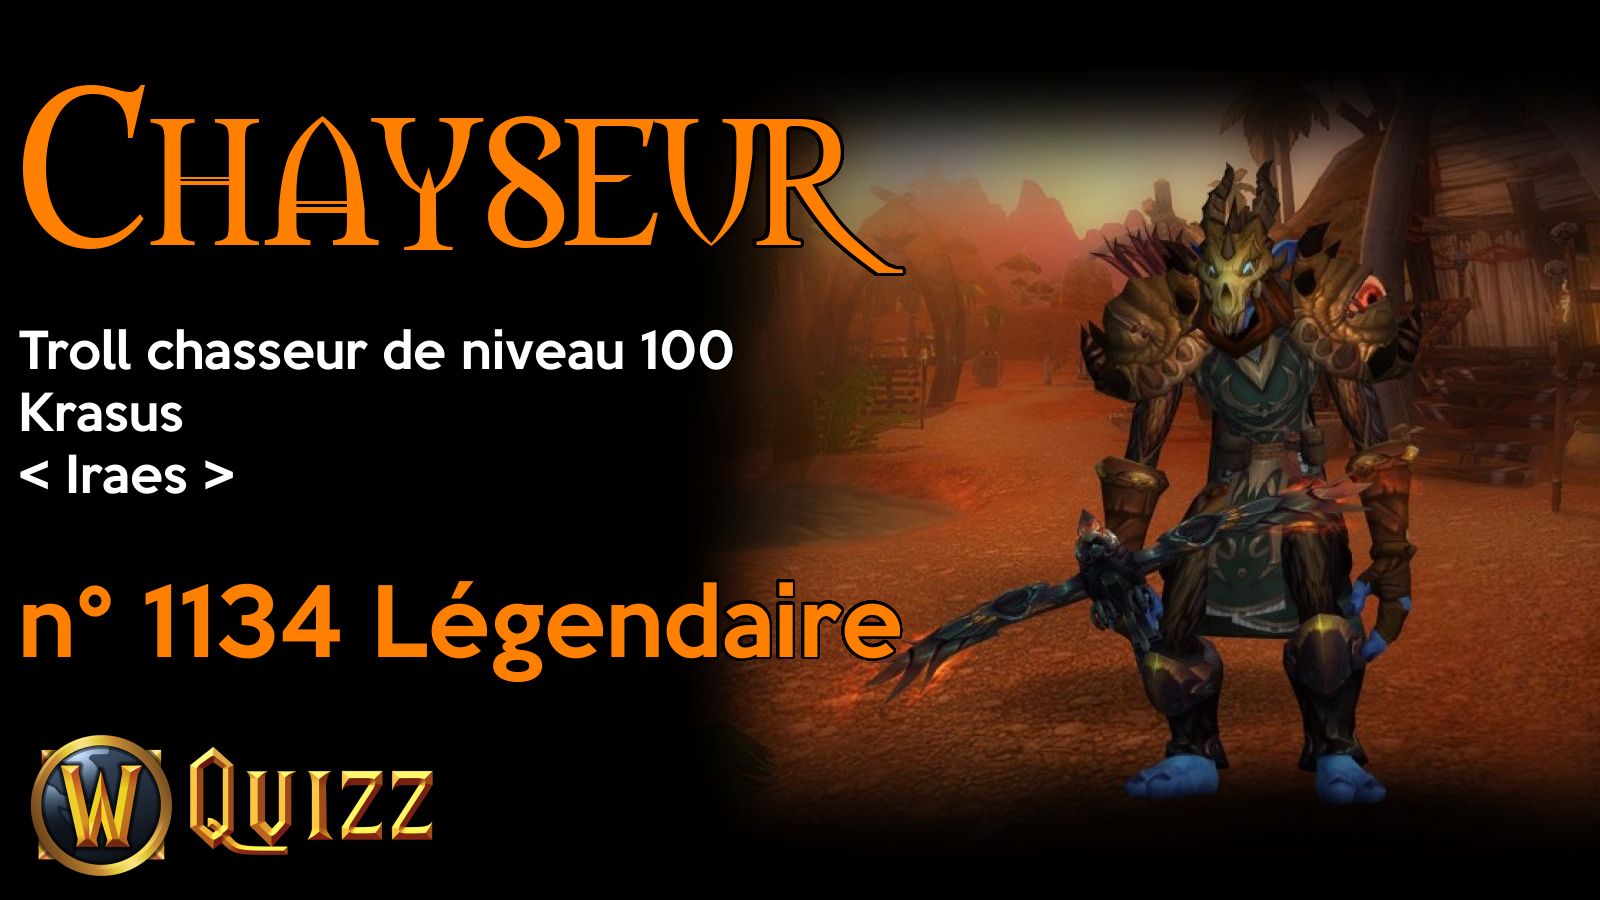 Chayseur, Troll chasseur de niveau 100, Krasus